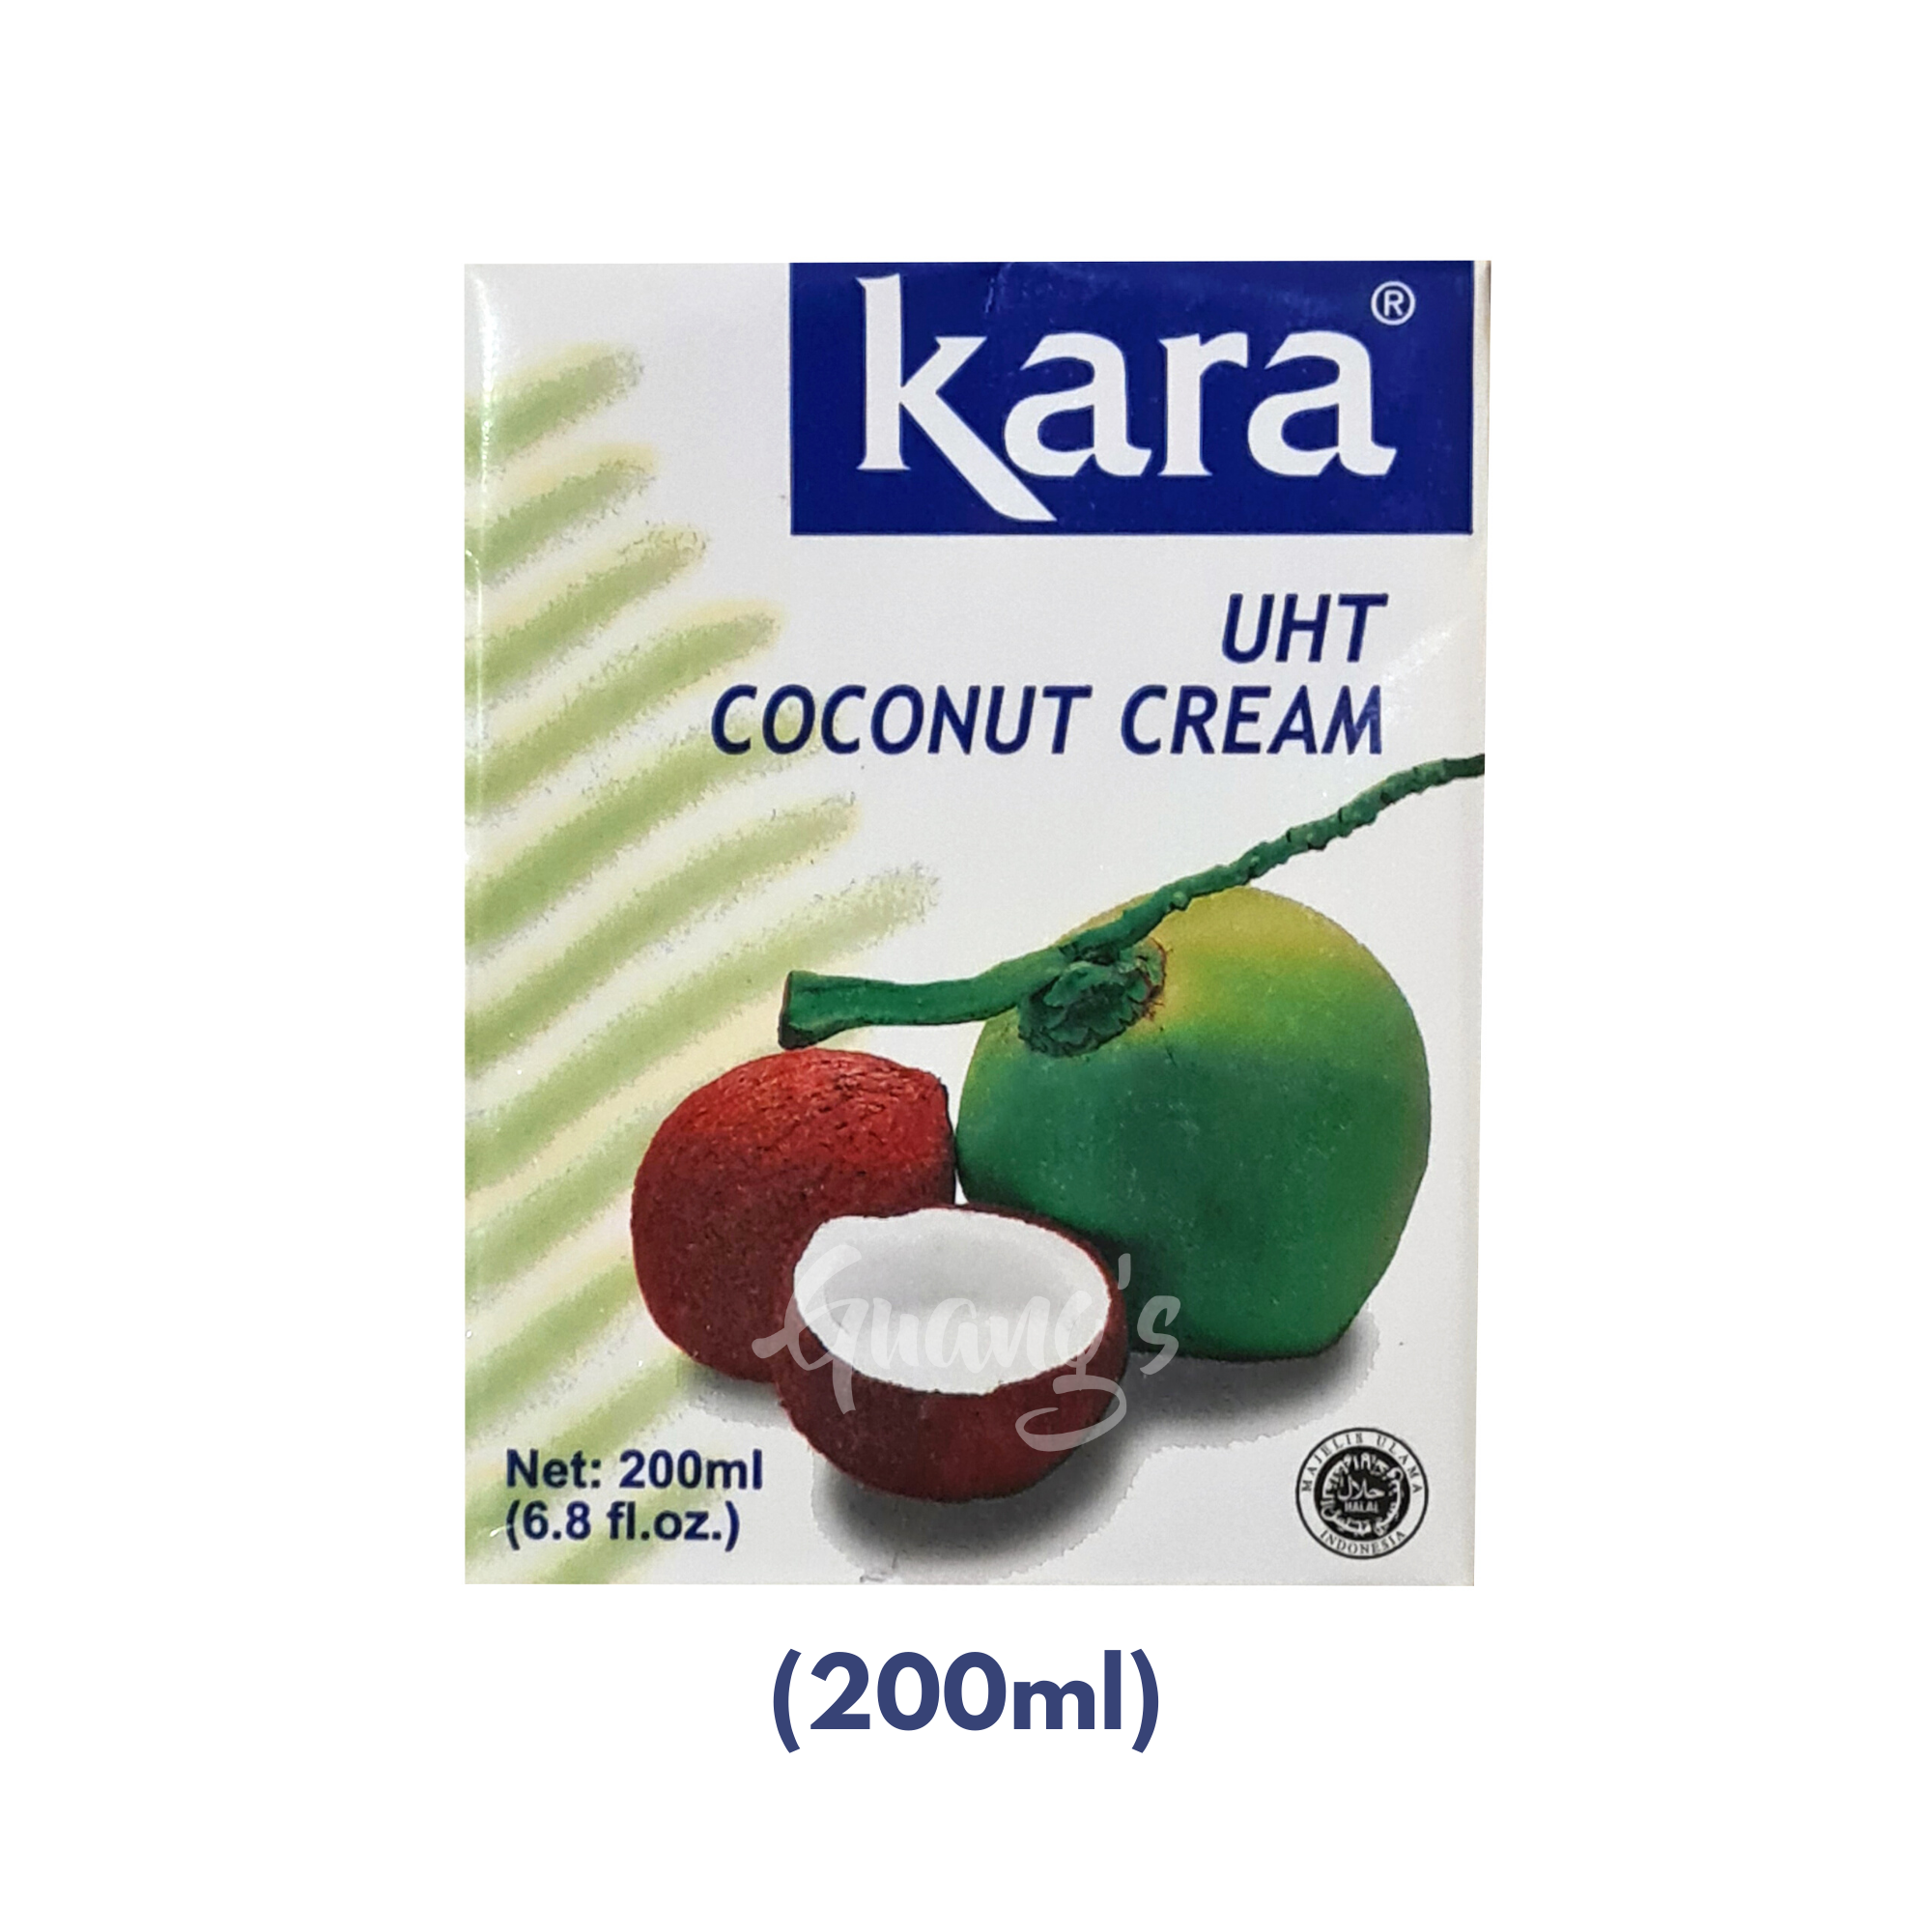 Kara Coconut Cream (200ml)